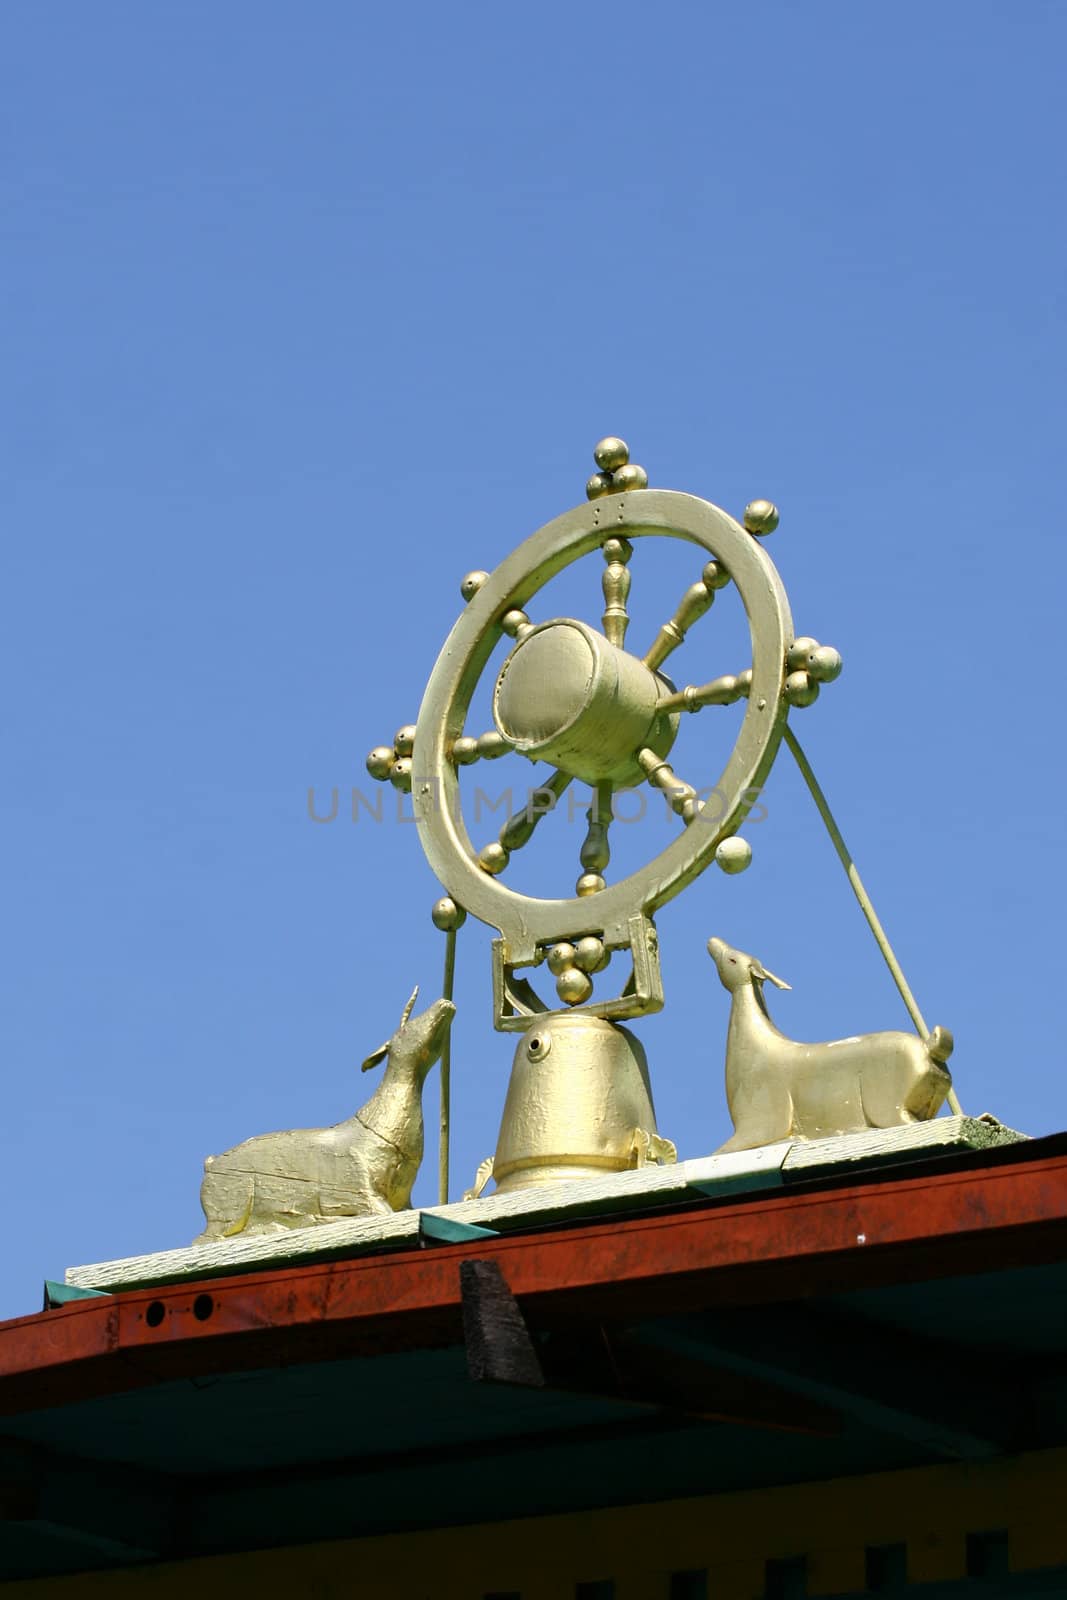 Wheel figure on a roof buddas monastery